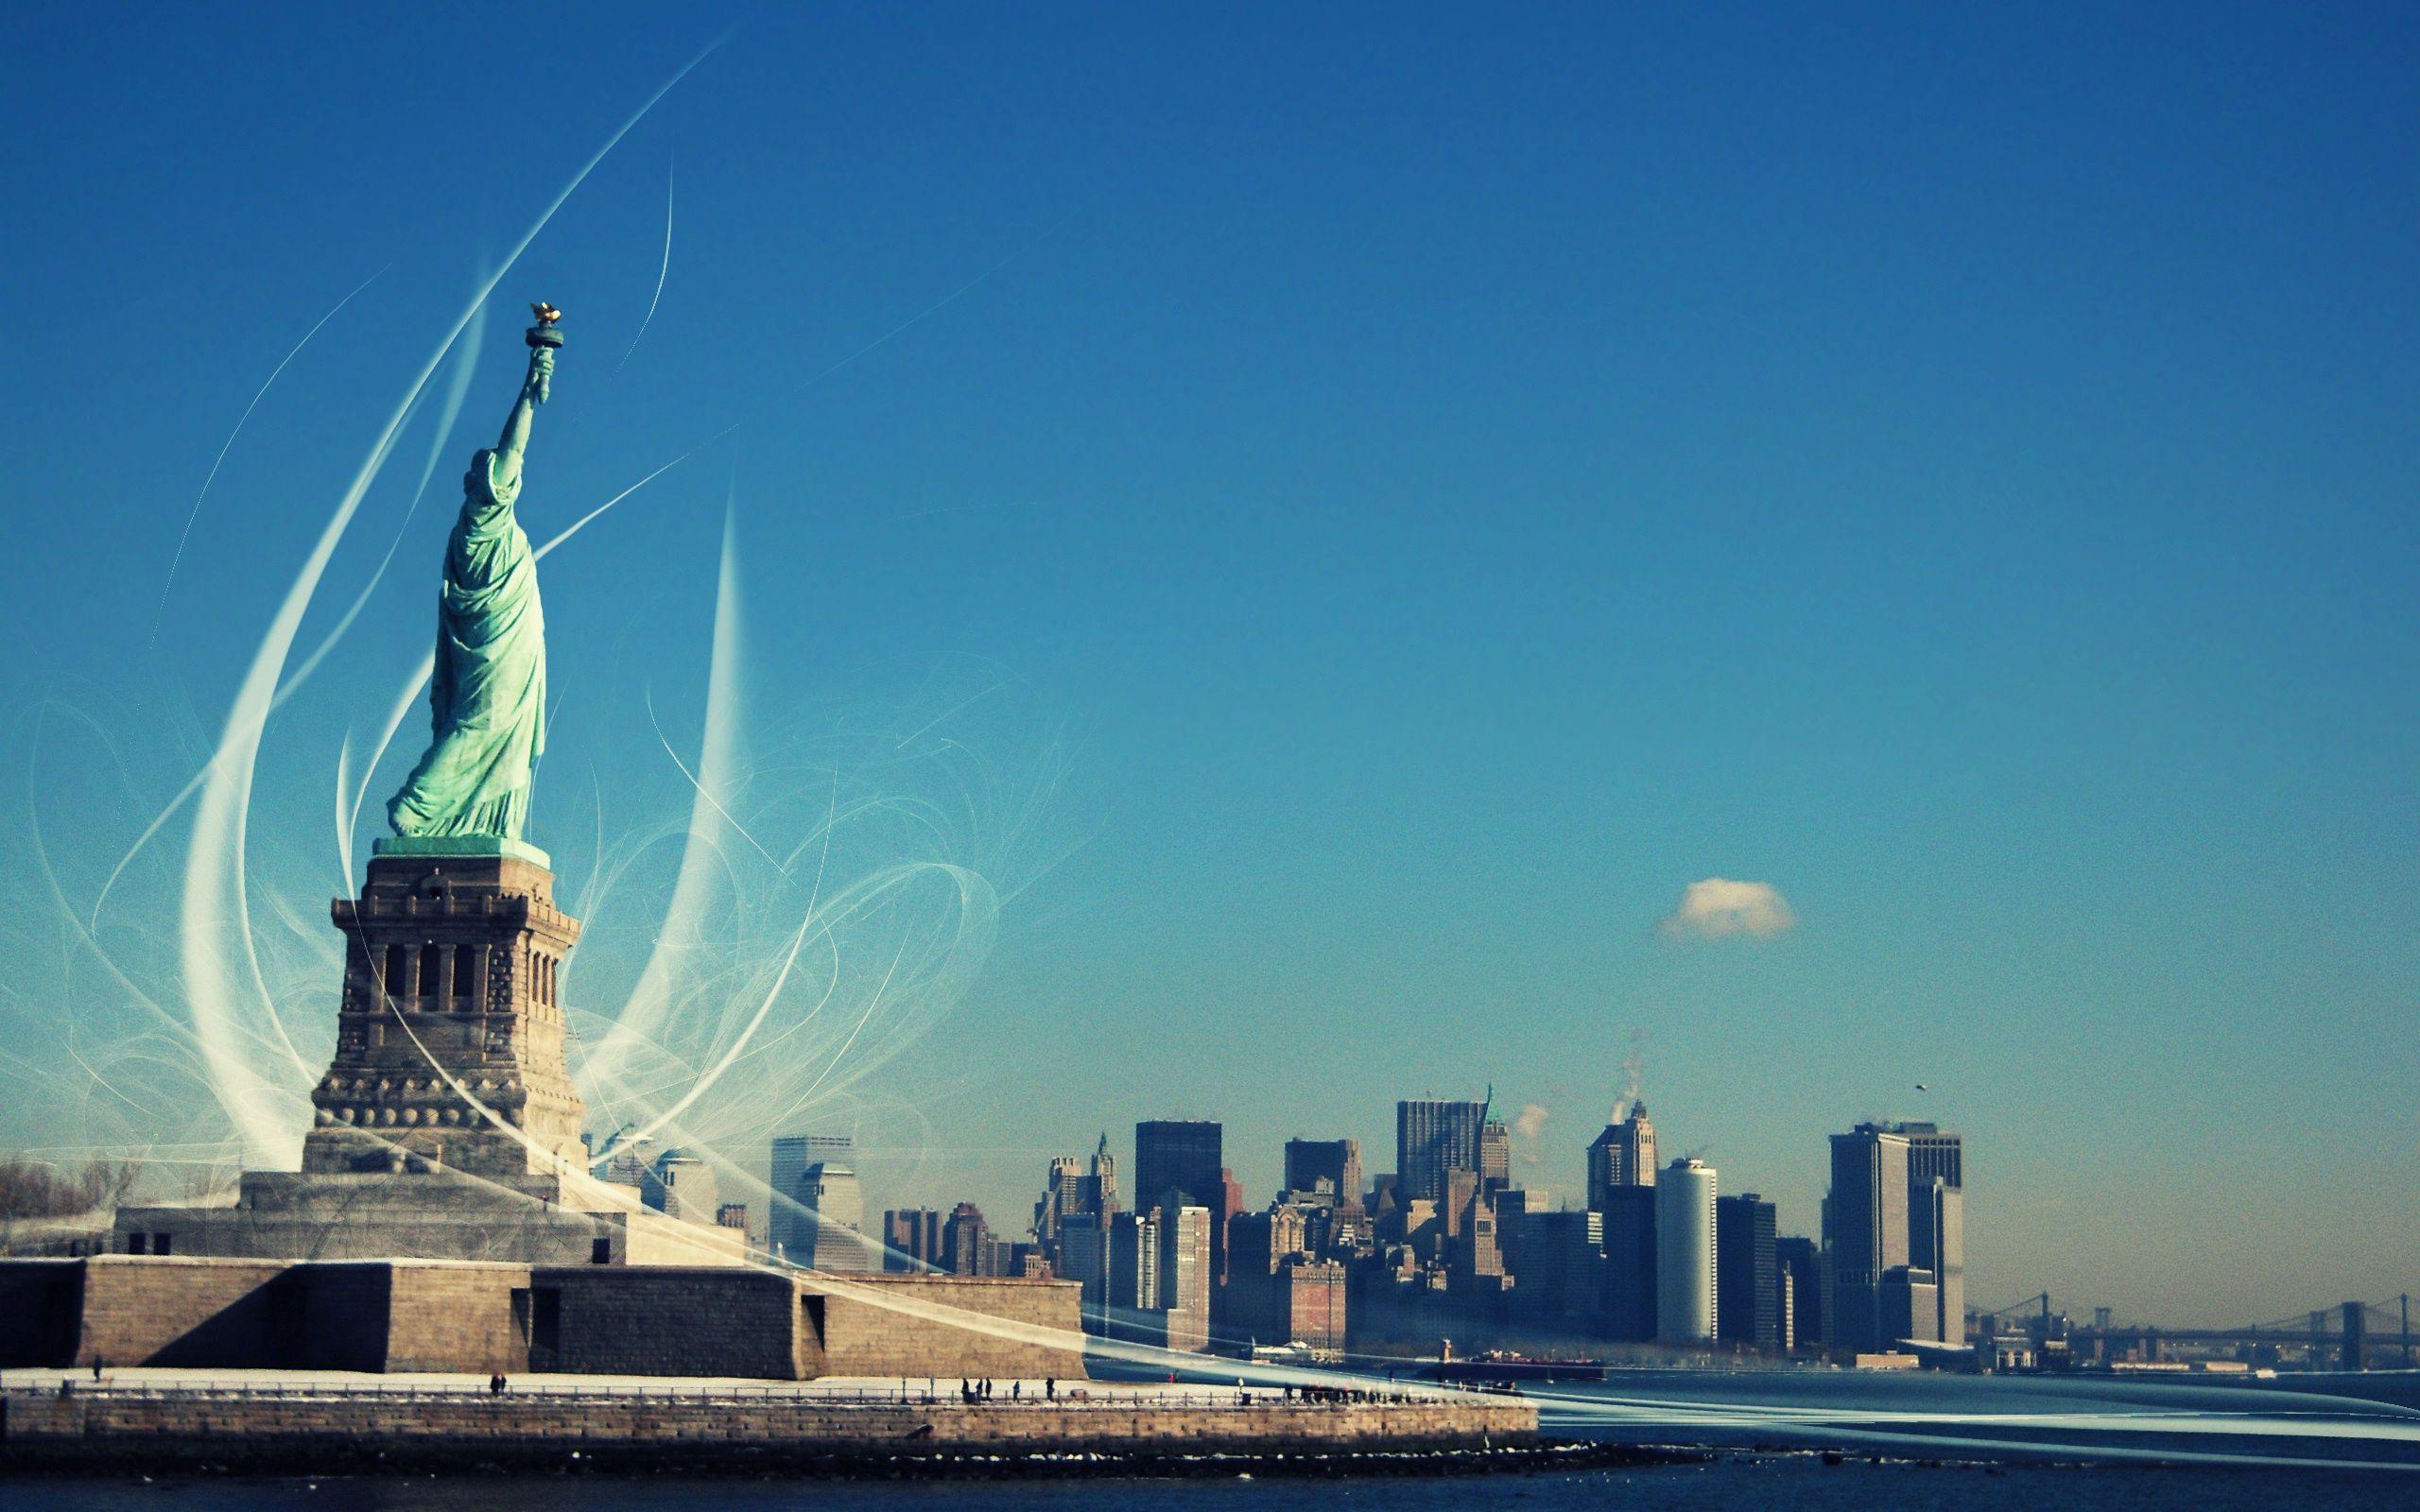 Wallpaper.wiki New Yorks Statue Of Liberty Full Hd For Desktop